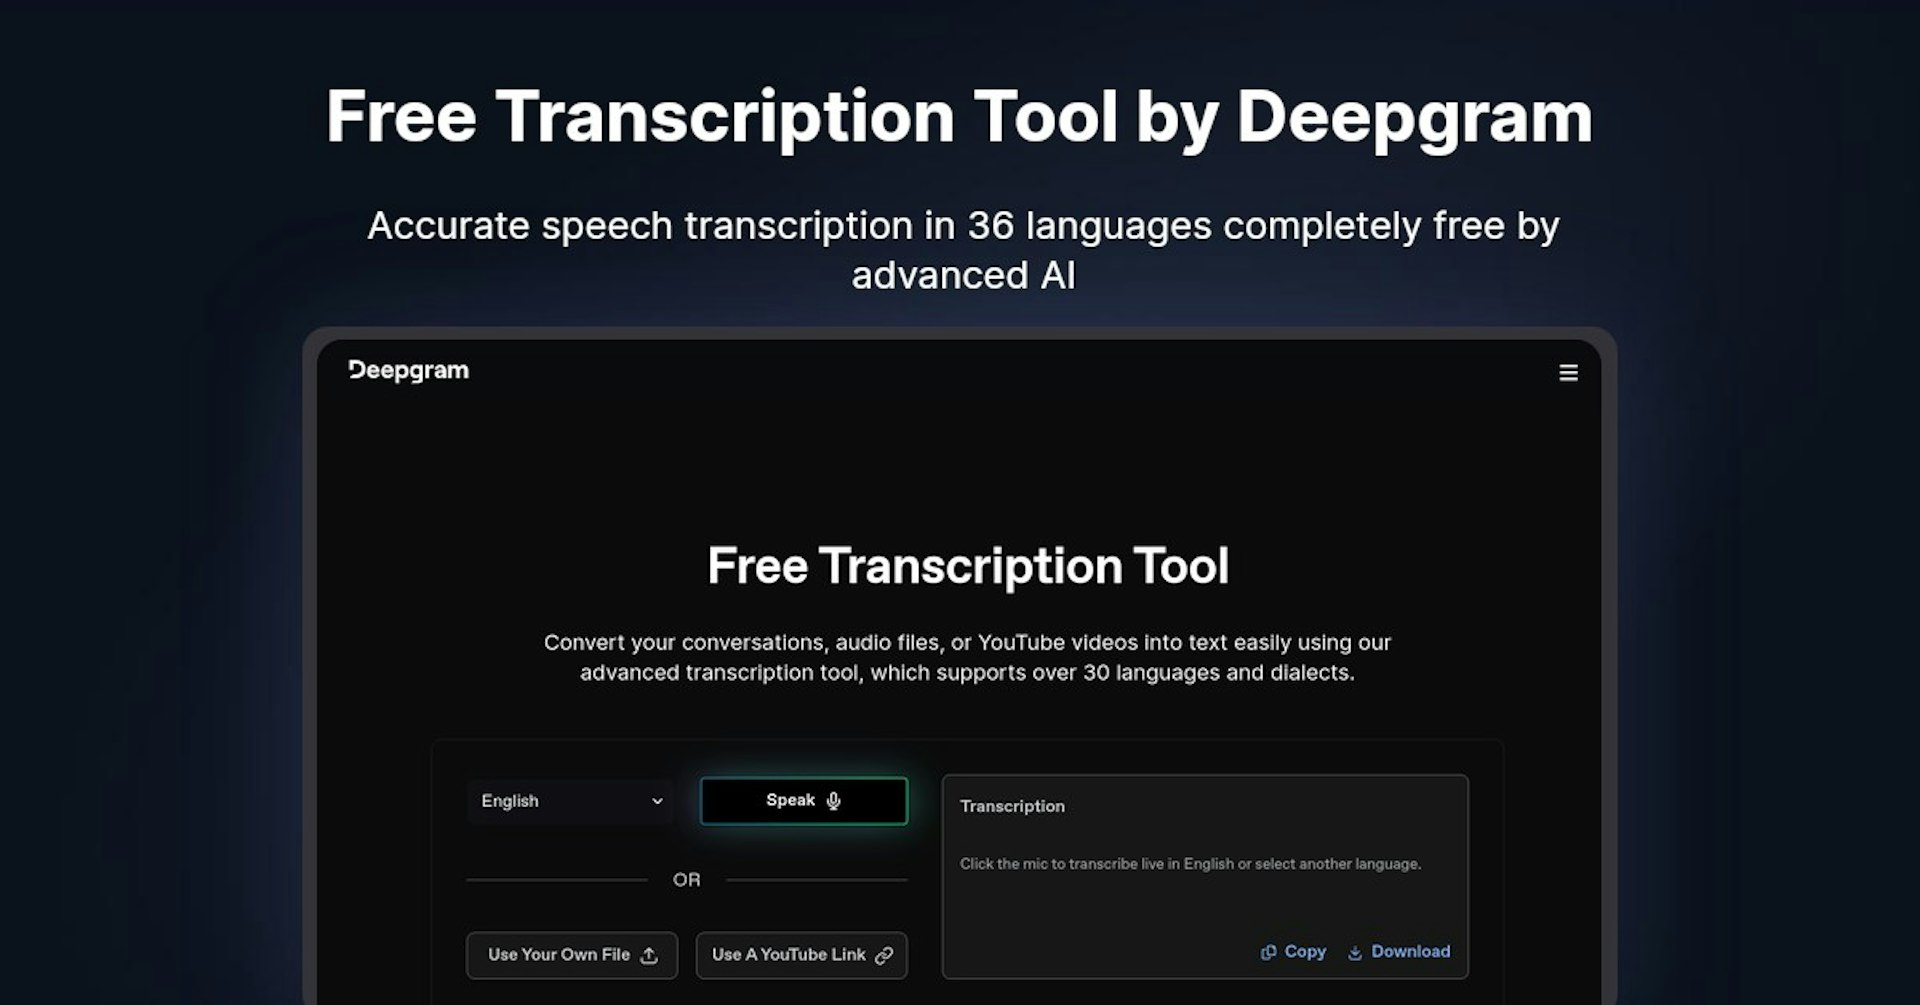 Free Transcription Tool by Deepgram